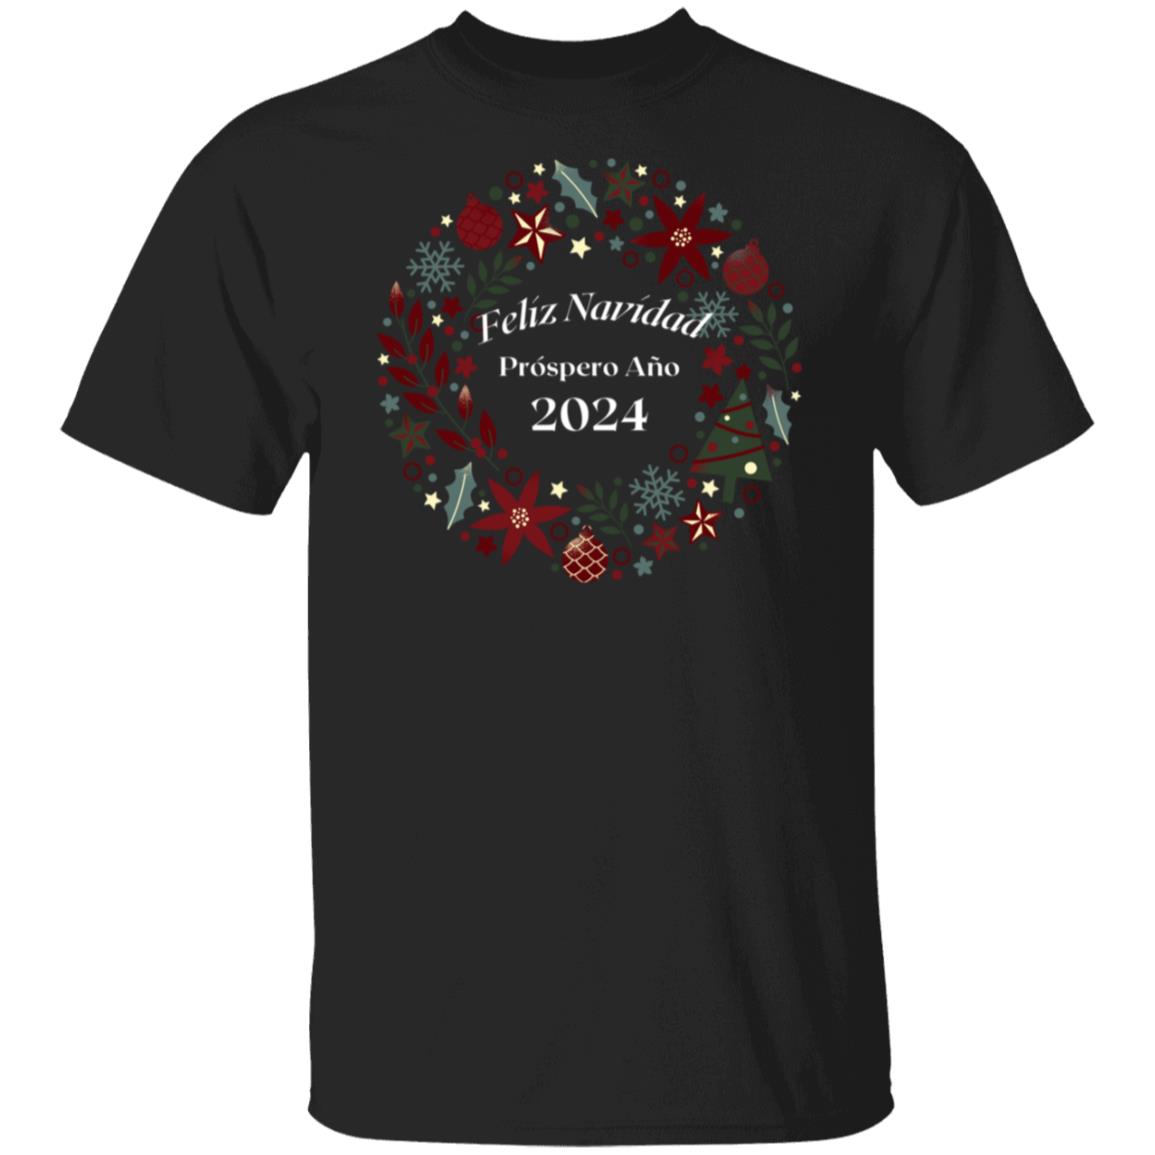 Feliz Navidad Prospero Ano 2024 - T-Shirt